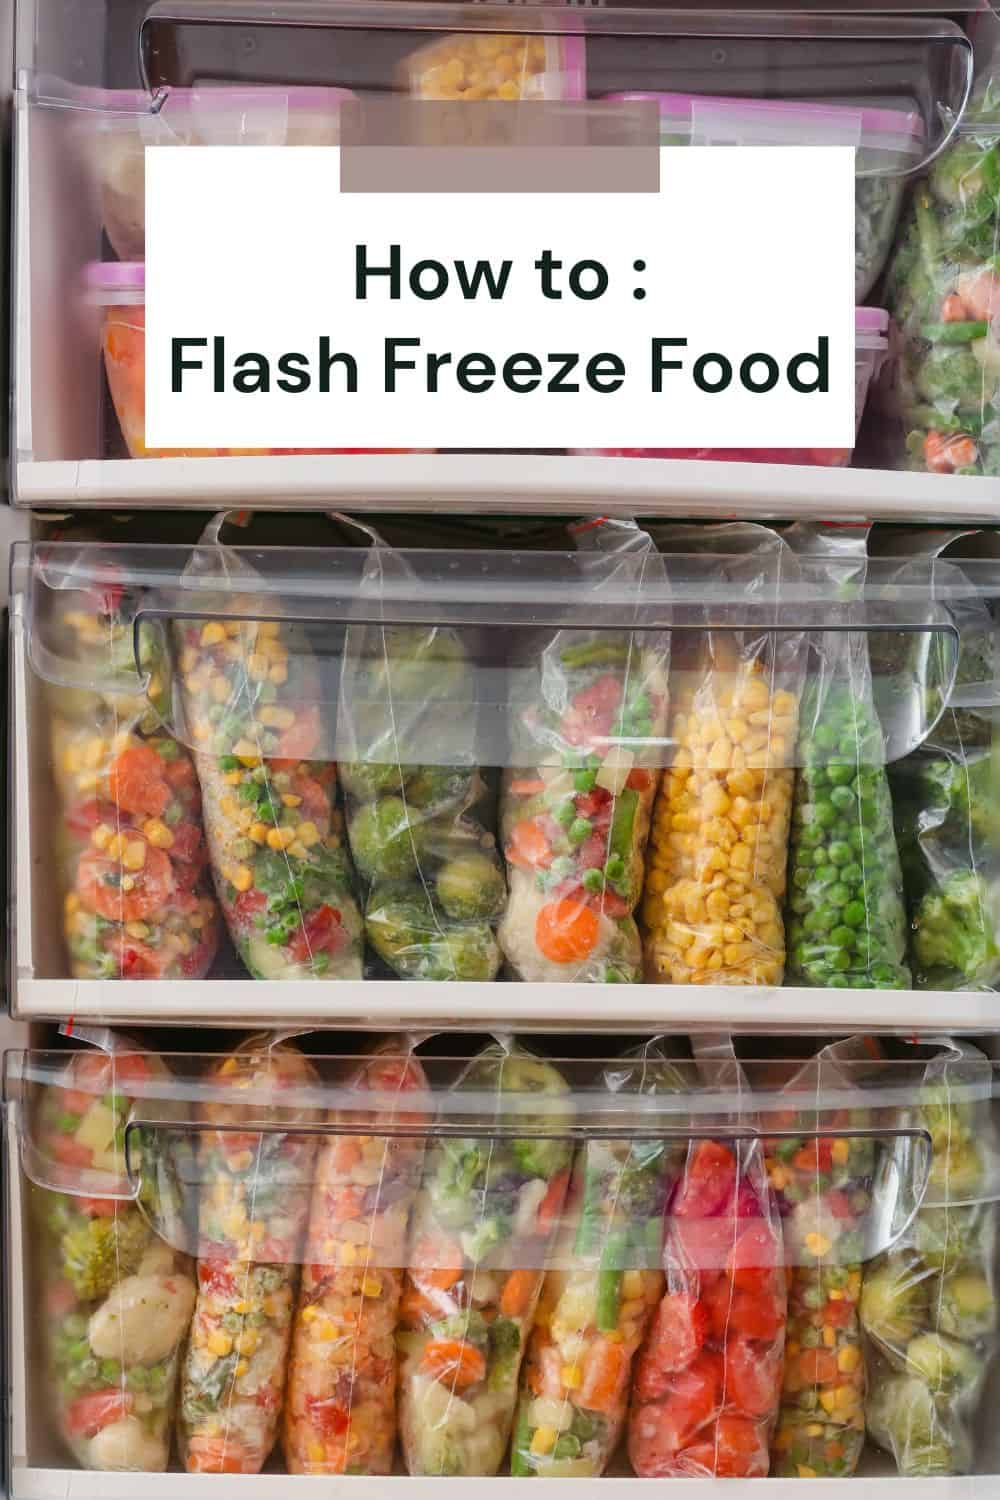 How to Flash Freeze Food.